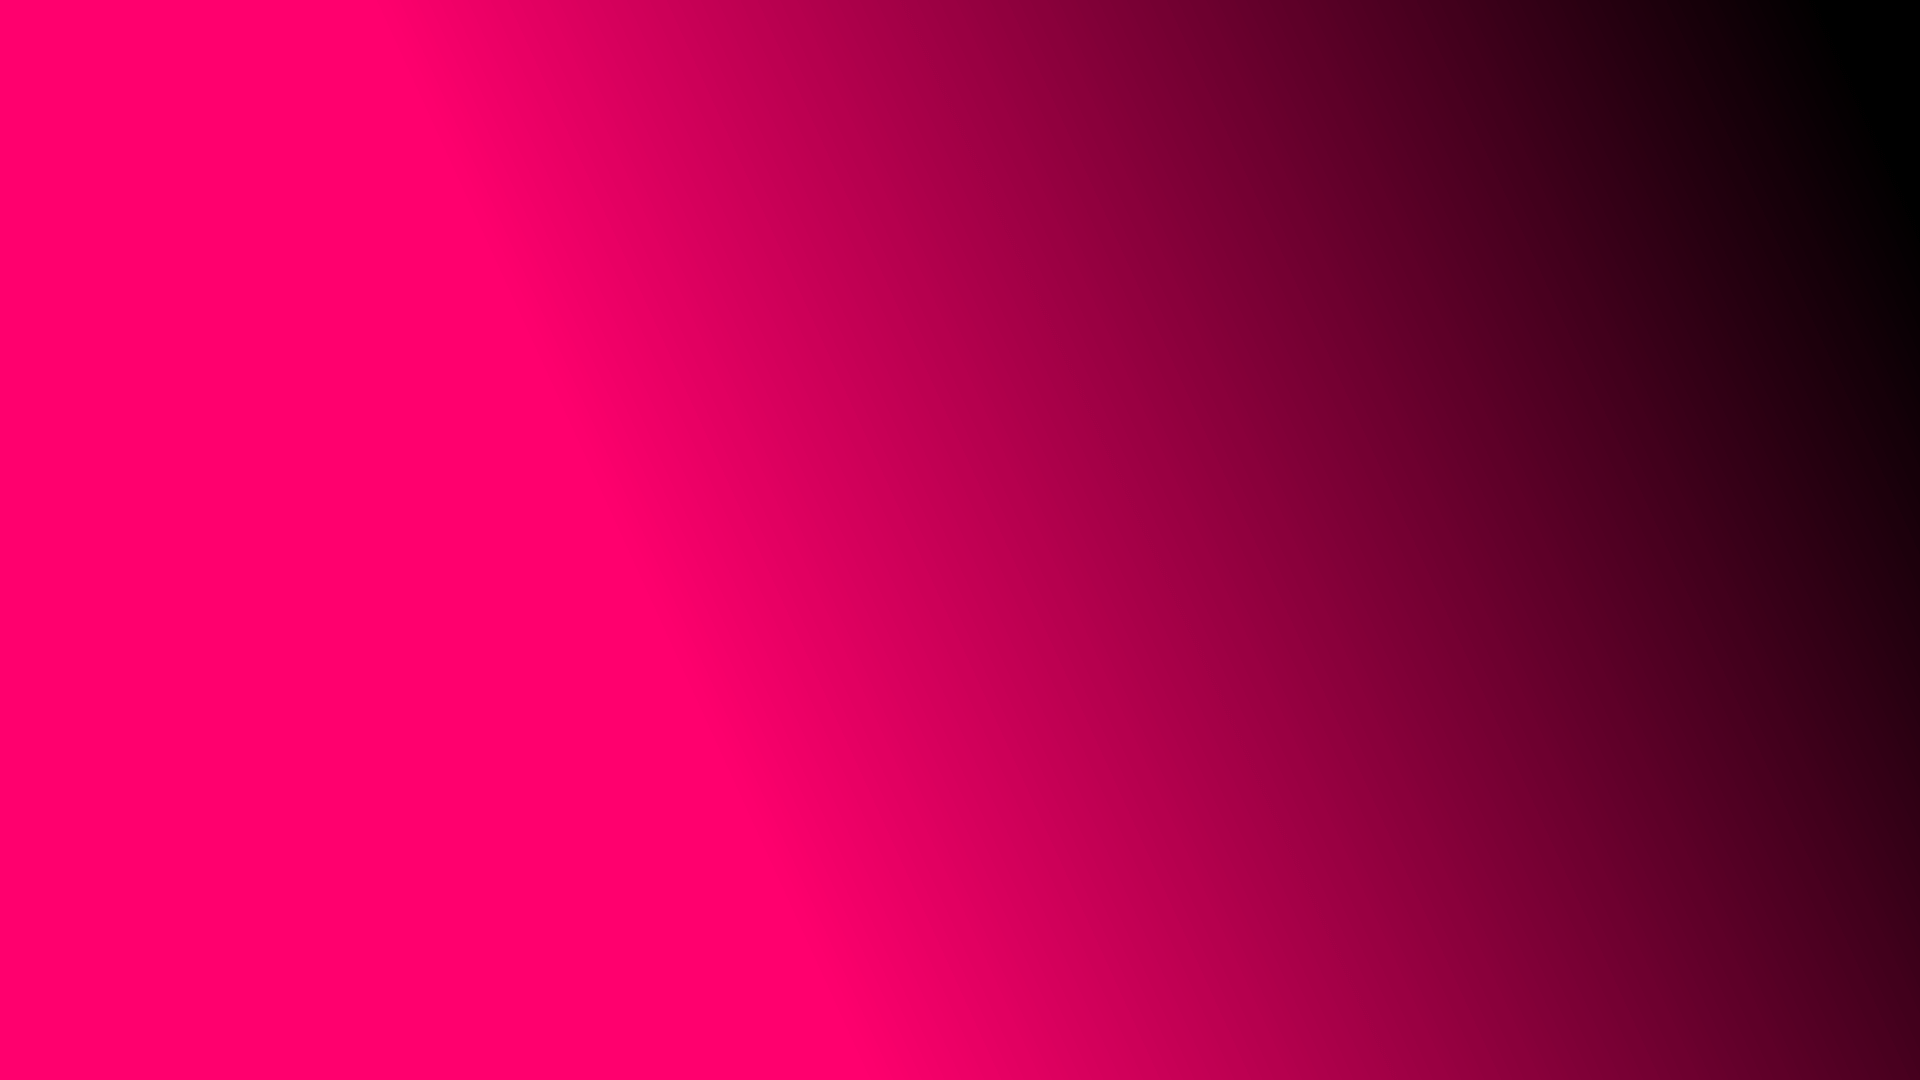 Nothing found for Pink black gradient desktop wallpaper